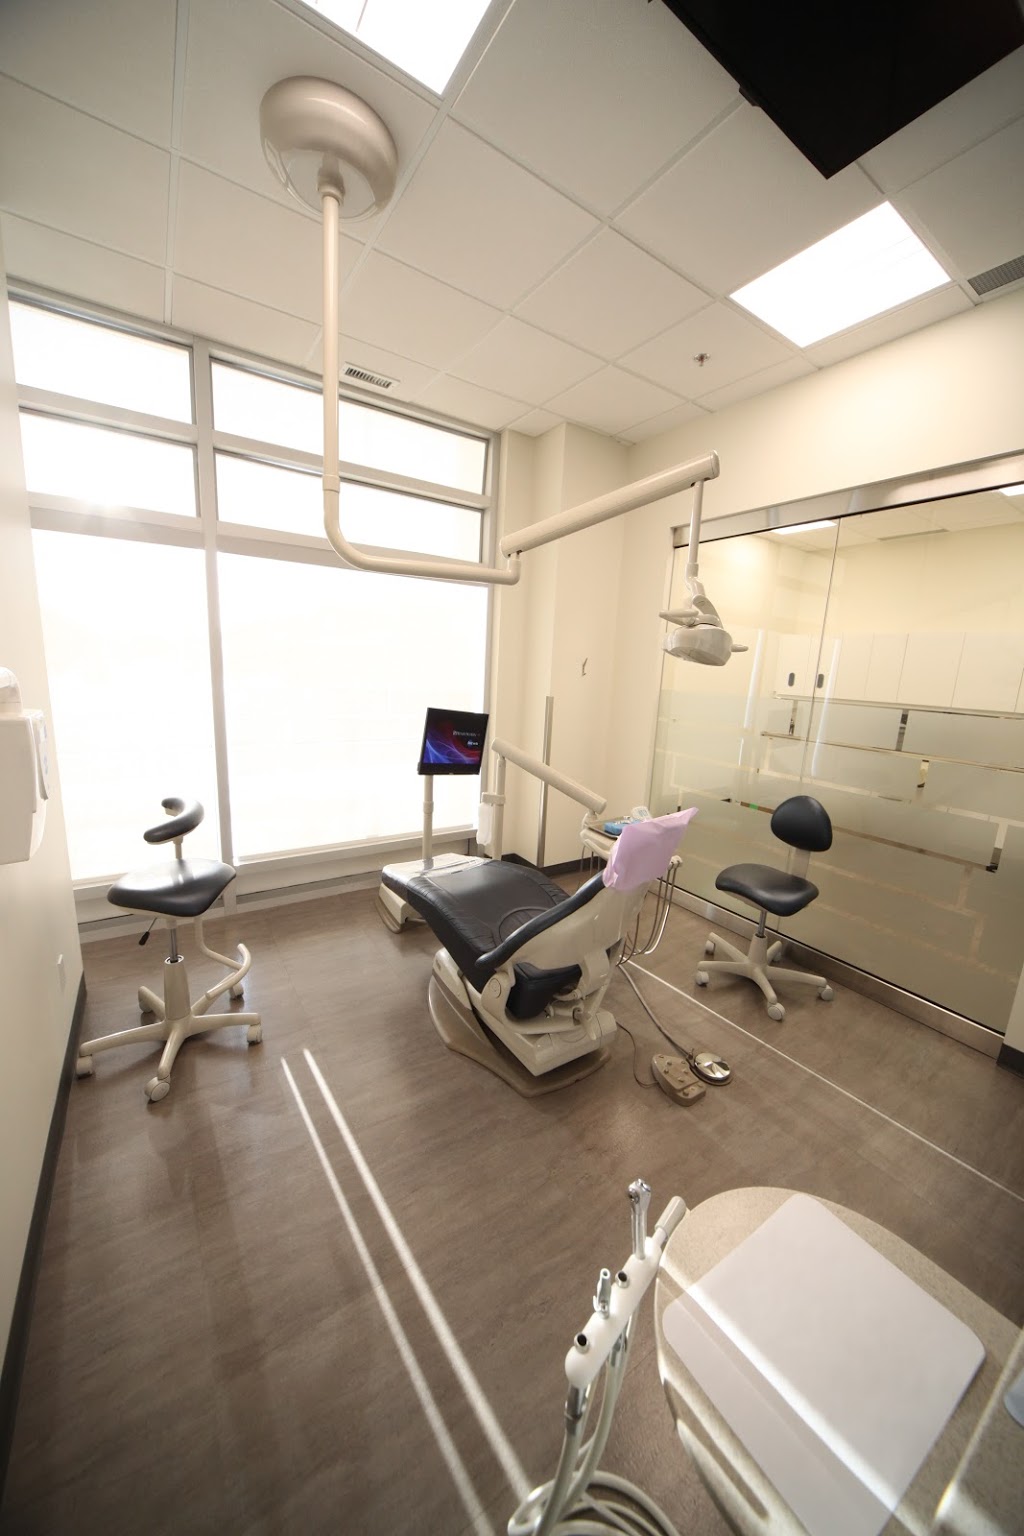 South East Family Dental | dentist | 1752 34 Ave., Edmonton, AB T6T 1B1, Canada | 7802502500 OR +1 780-250-2500